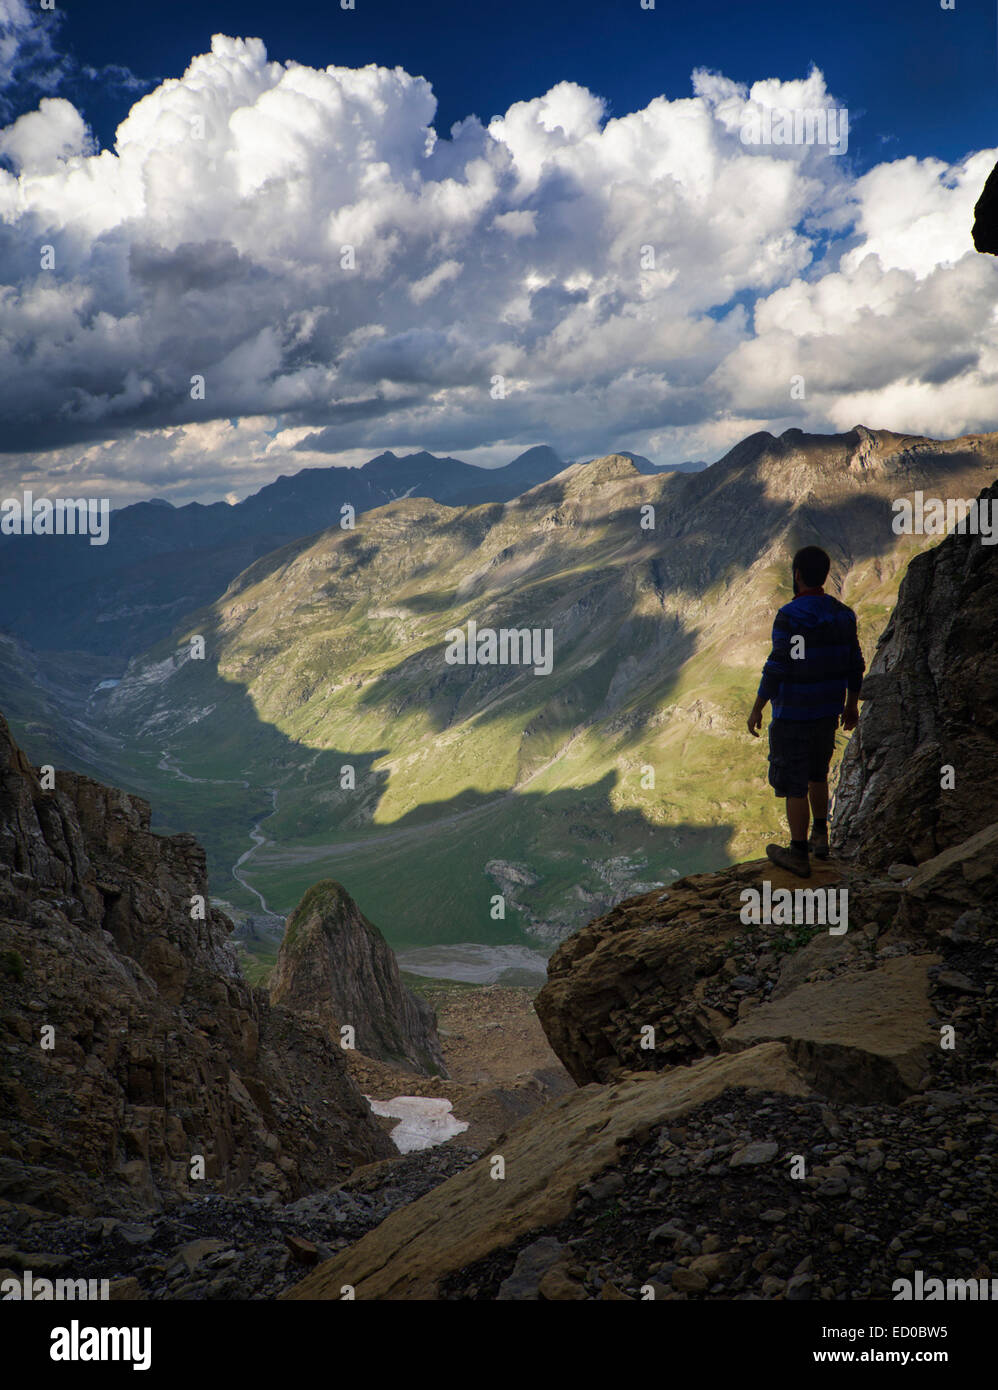 Spain, Aragan, Provincia de Huesca, Bielsa, Landscape with man looking at view in Pyrenees Stock Photo